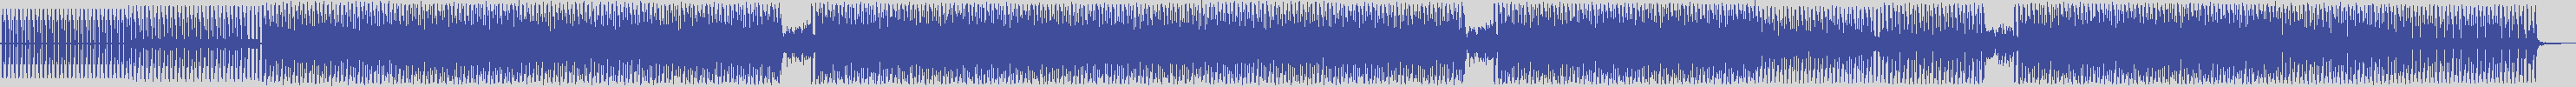 atomic_recordings [AR009] Luxor - Back to Love [Luca Cassani Superfigo Remix] audio wave form